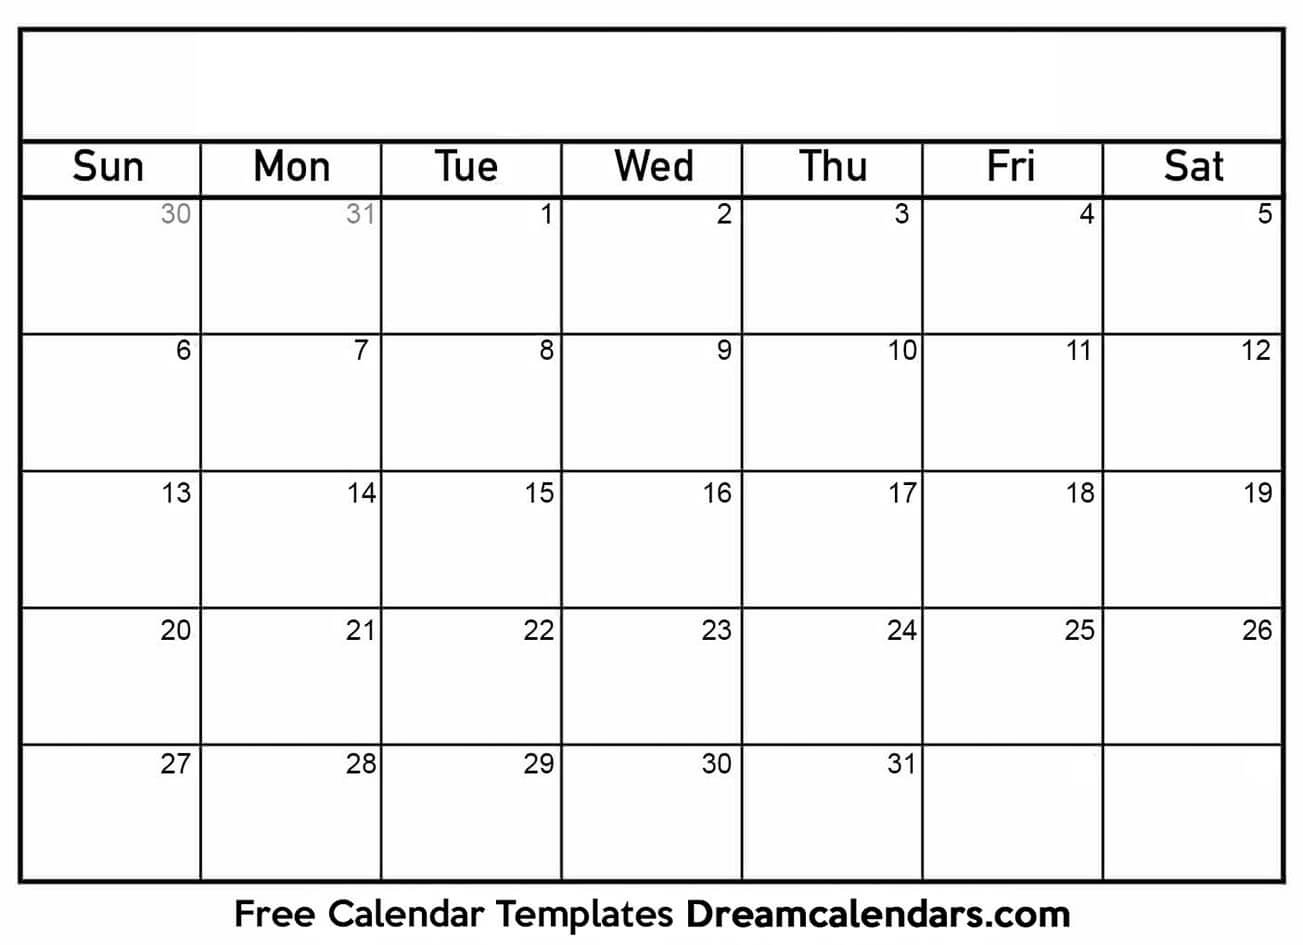 Printable Blank Calendar 2020 | Dream Calendars Dashing Blank Calenders With No Dates